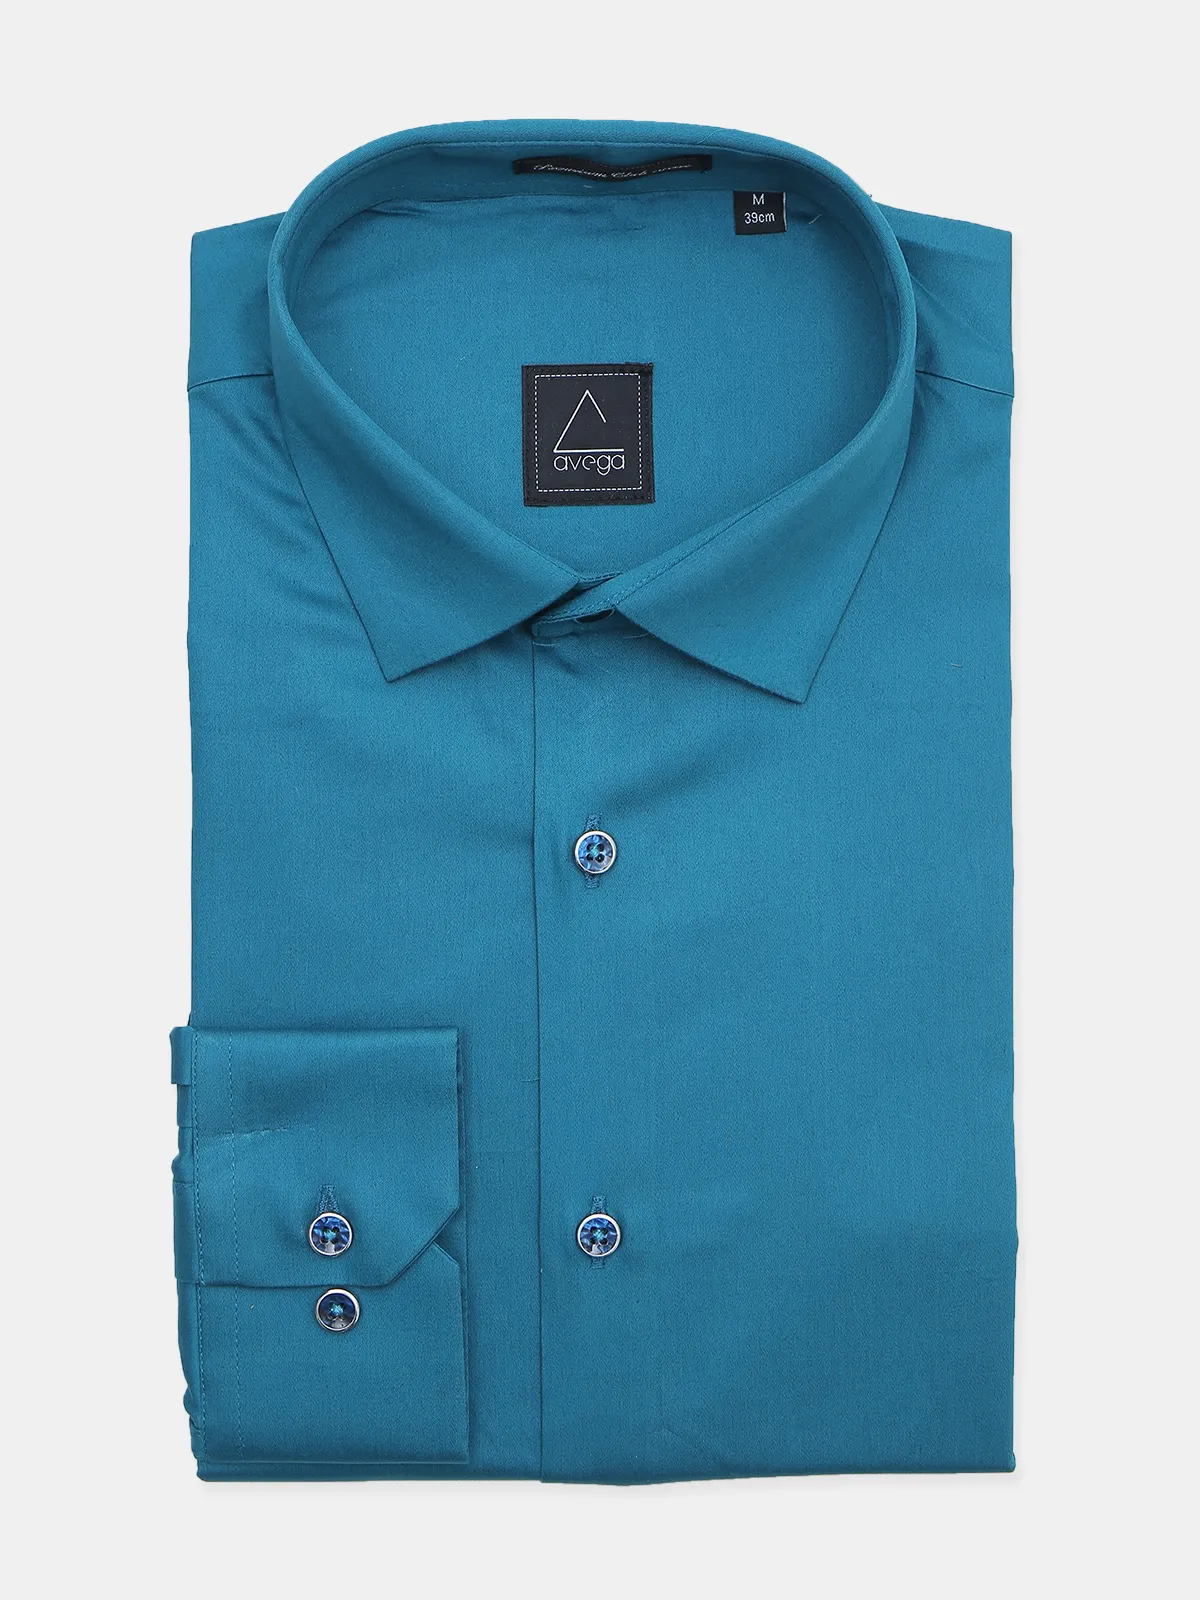 Avega teal blue solid cotton shirt